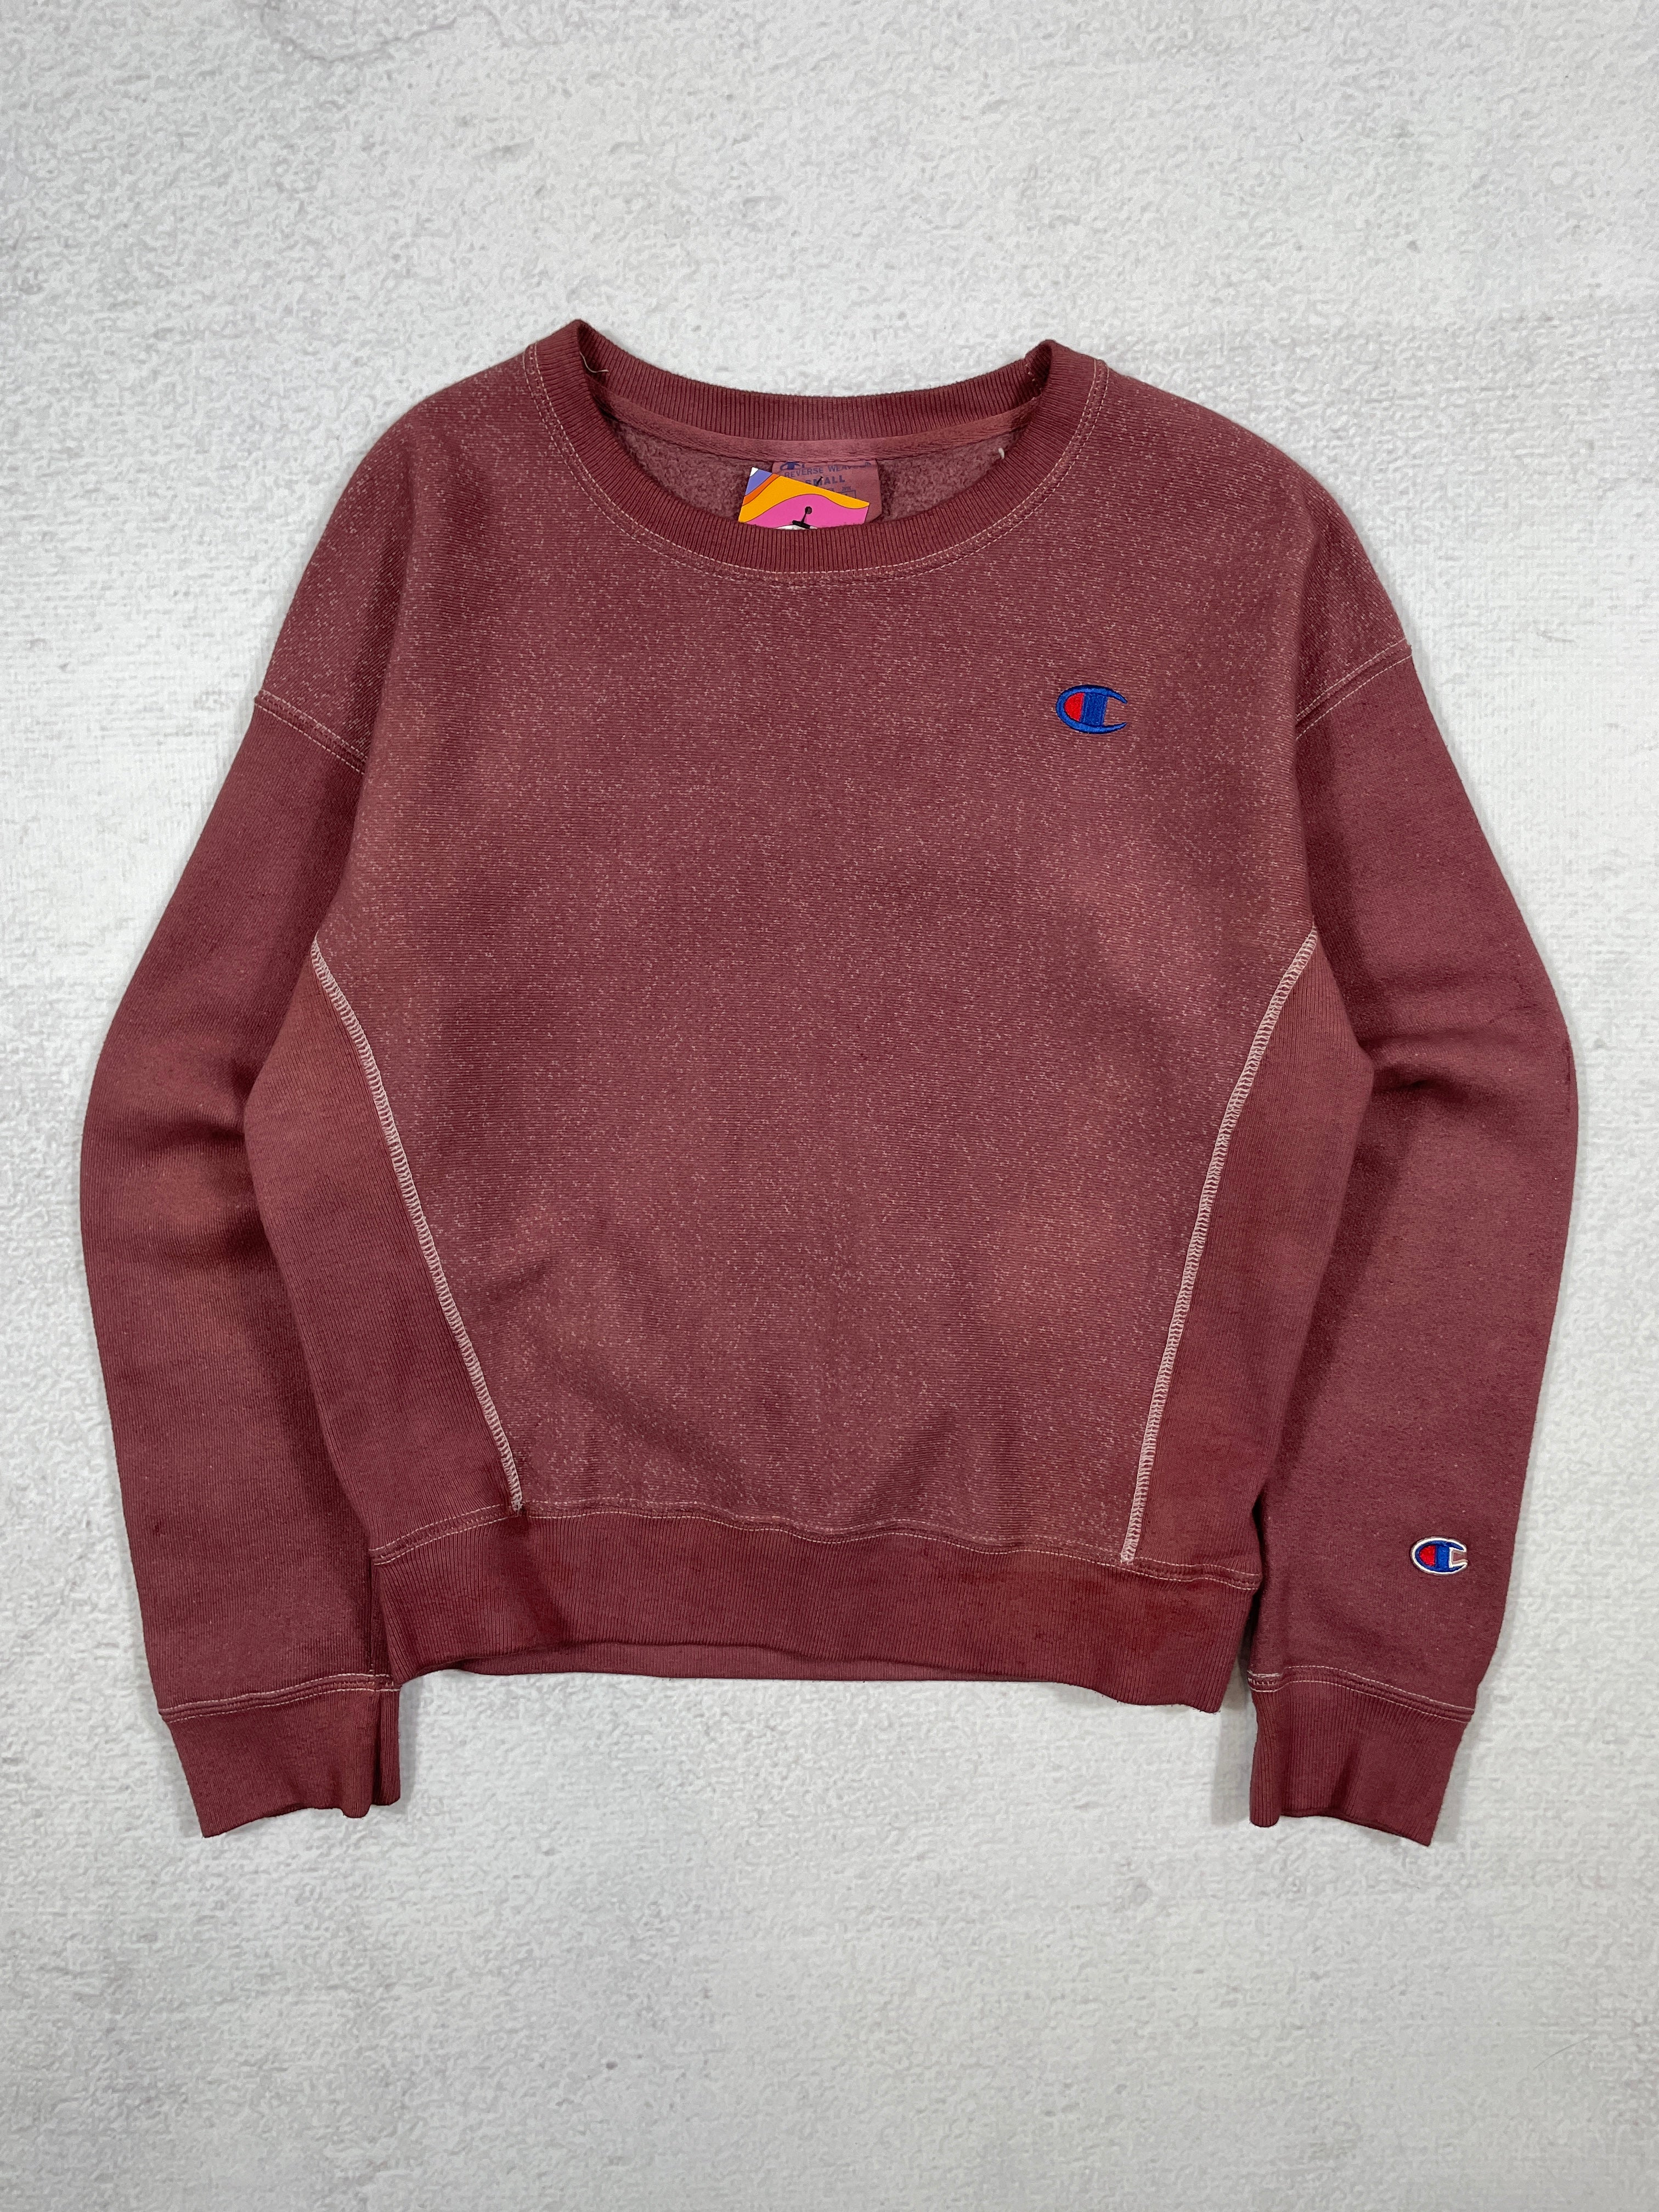 Vintage Dyed Champion Reverse Weave Crewneck Sweatshirt - Men's Small